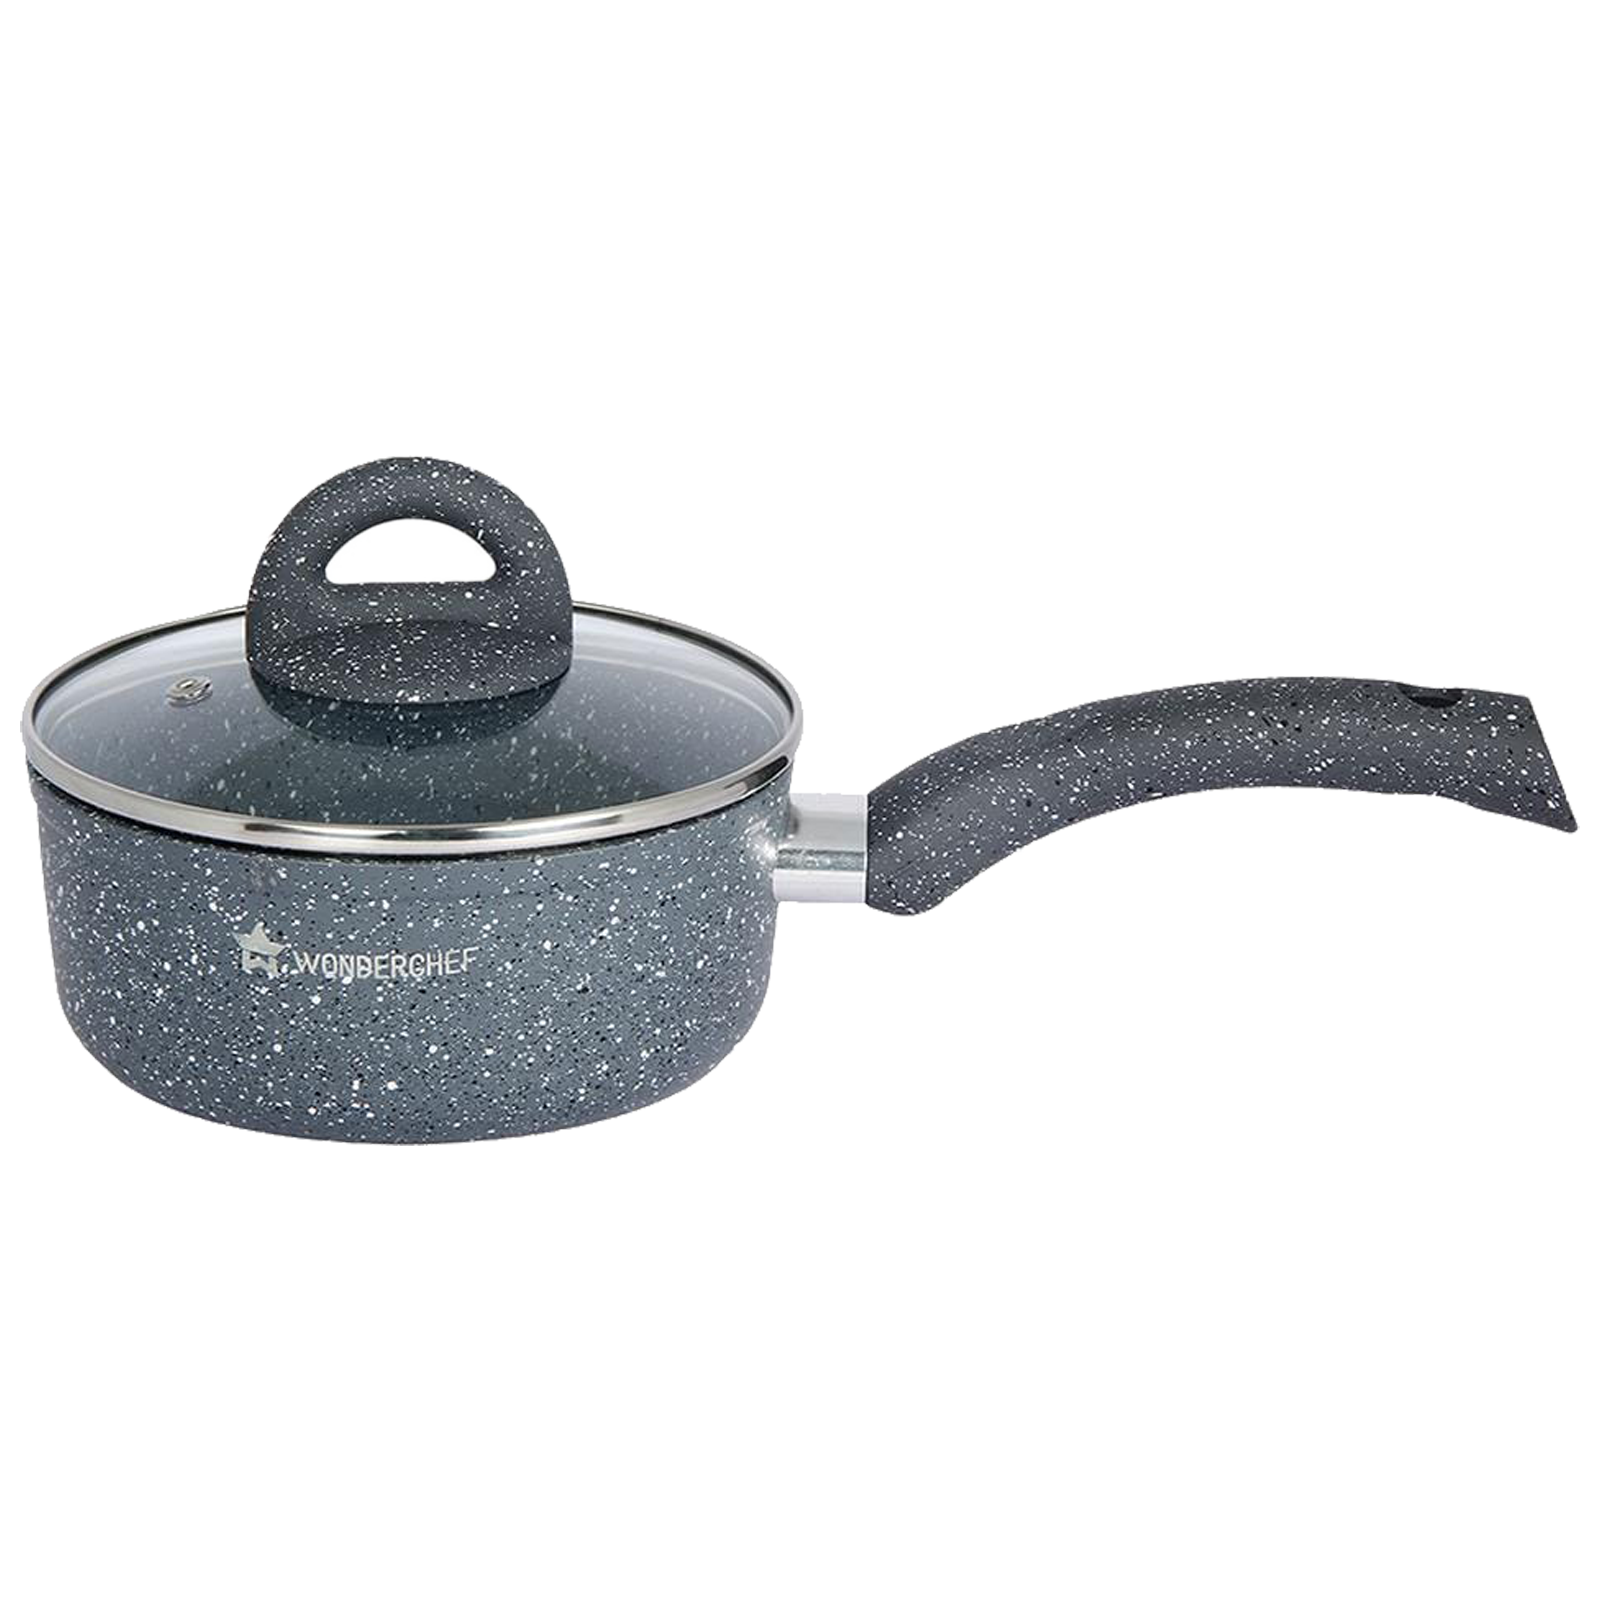 Wonderchef Sauce Pan (Non-Stick Marble Coating, 60004300, Grey)_1